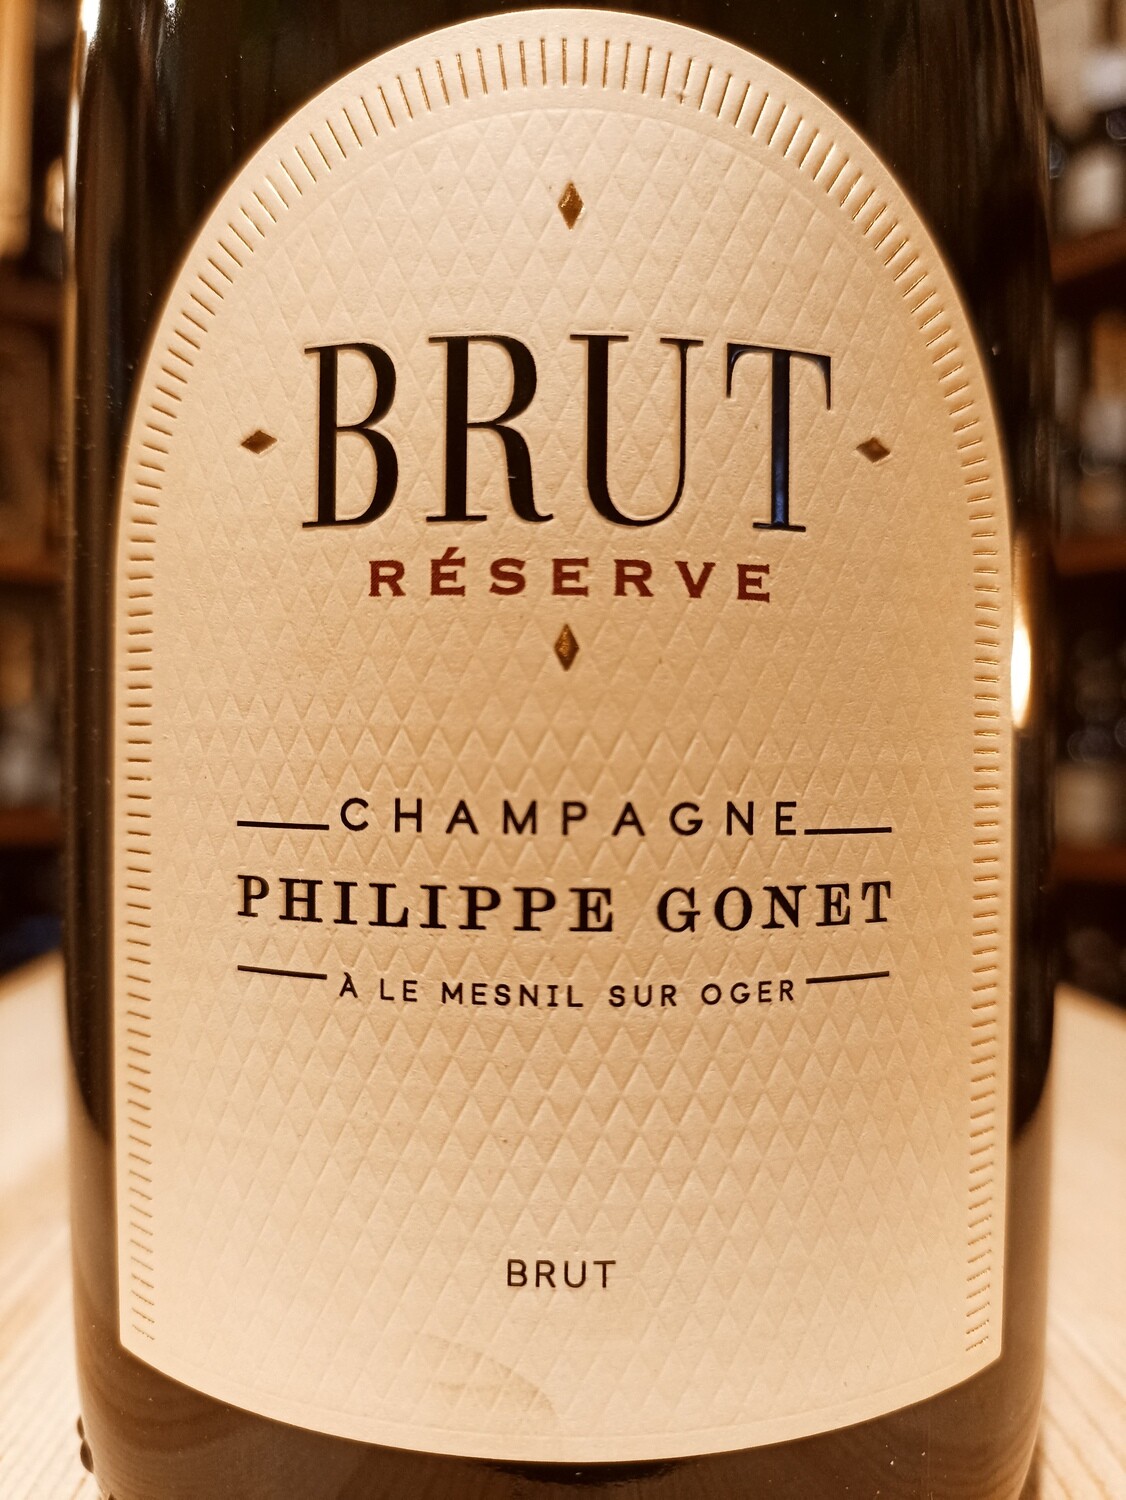 Champagne Philippe Gonet Brut Reserve S.A. R.M. a Les Mesnil Sur Oger